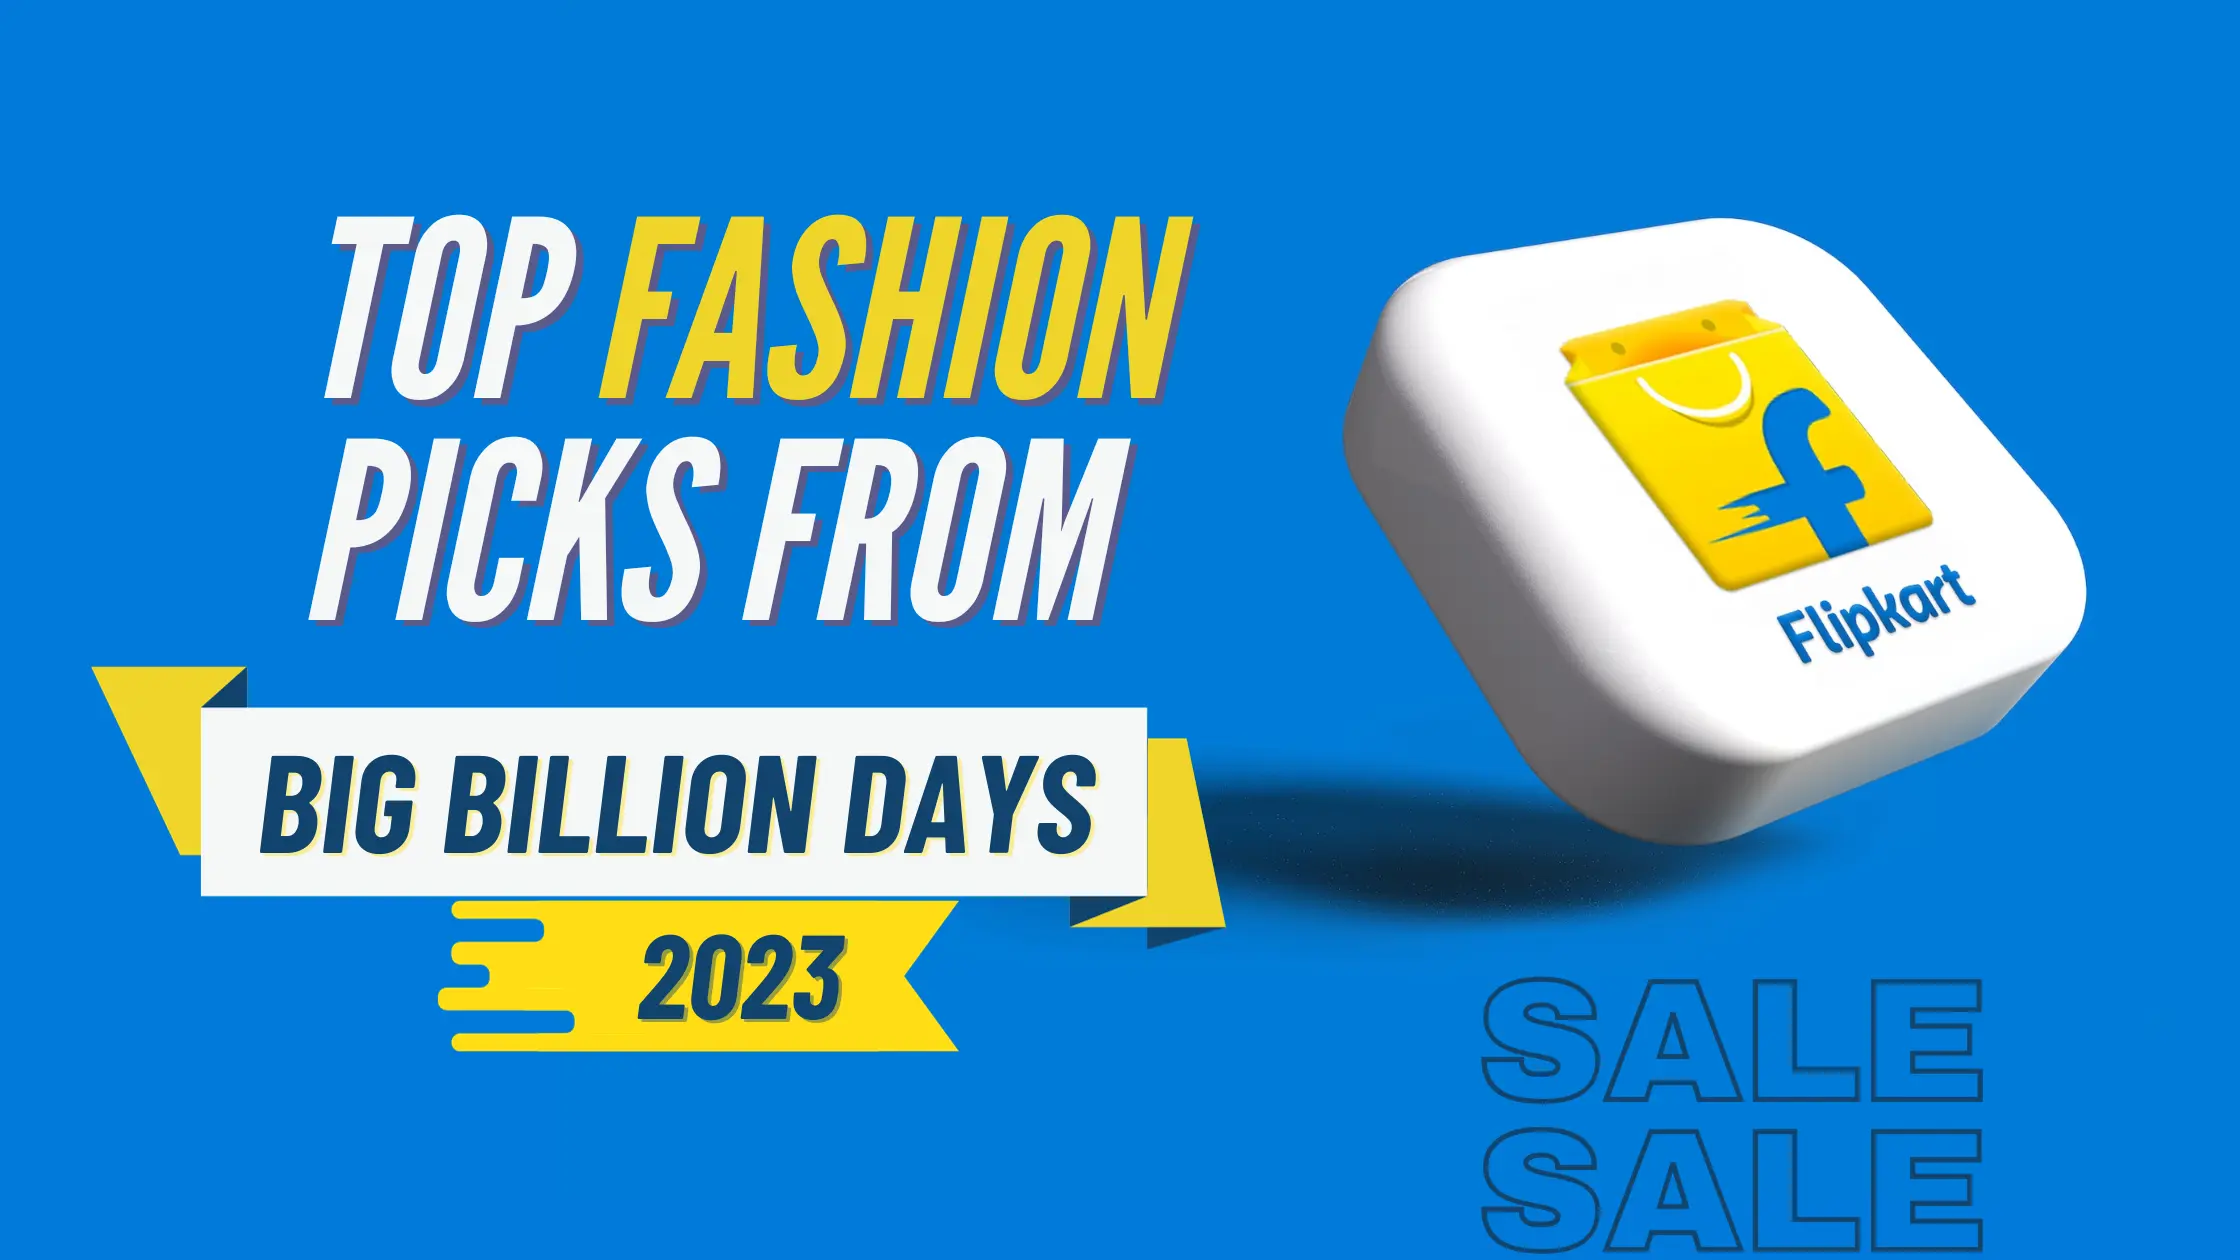 Top fashion picks from Flipkart big billion days 2023.